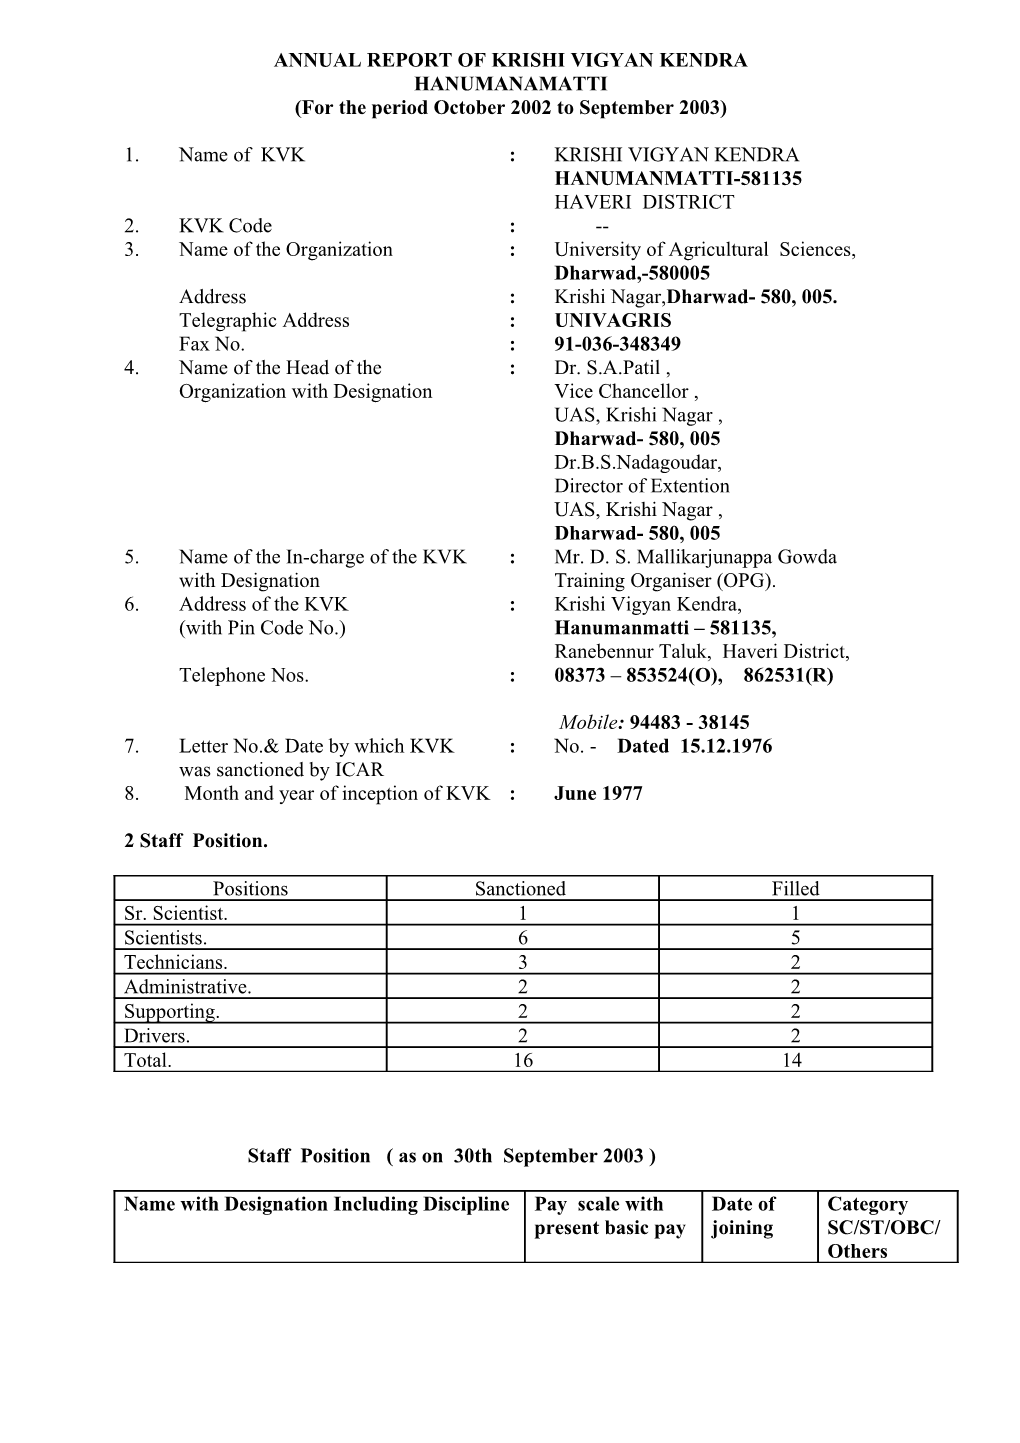 Annual Report of Krishi Vigyan Kendra